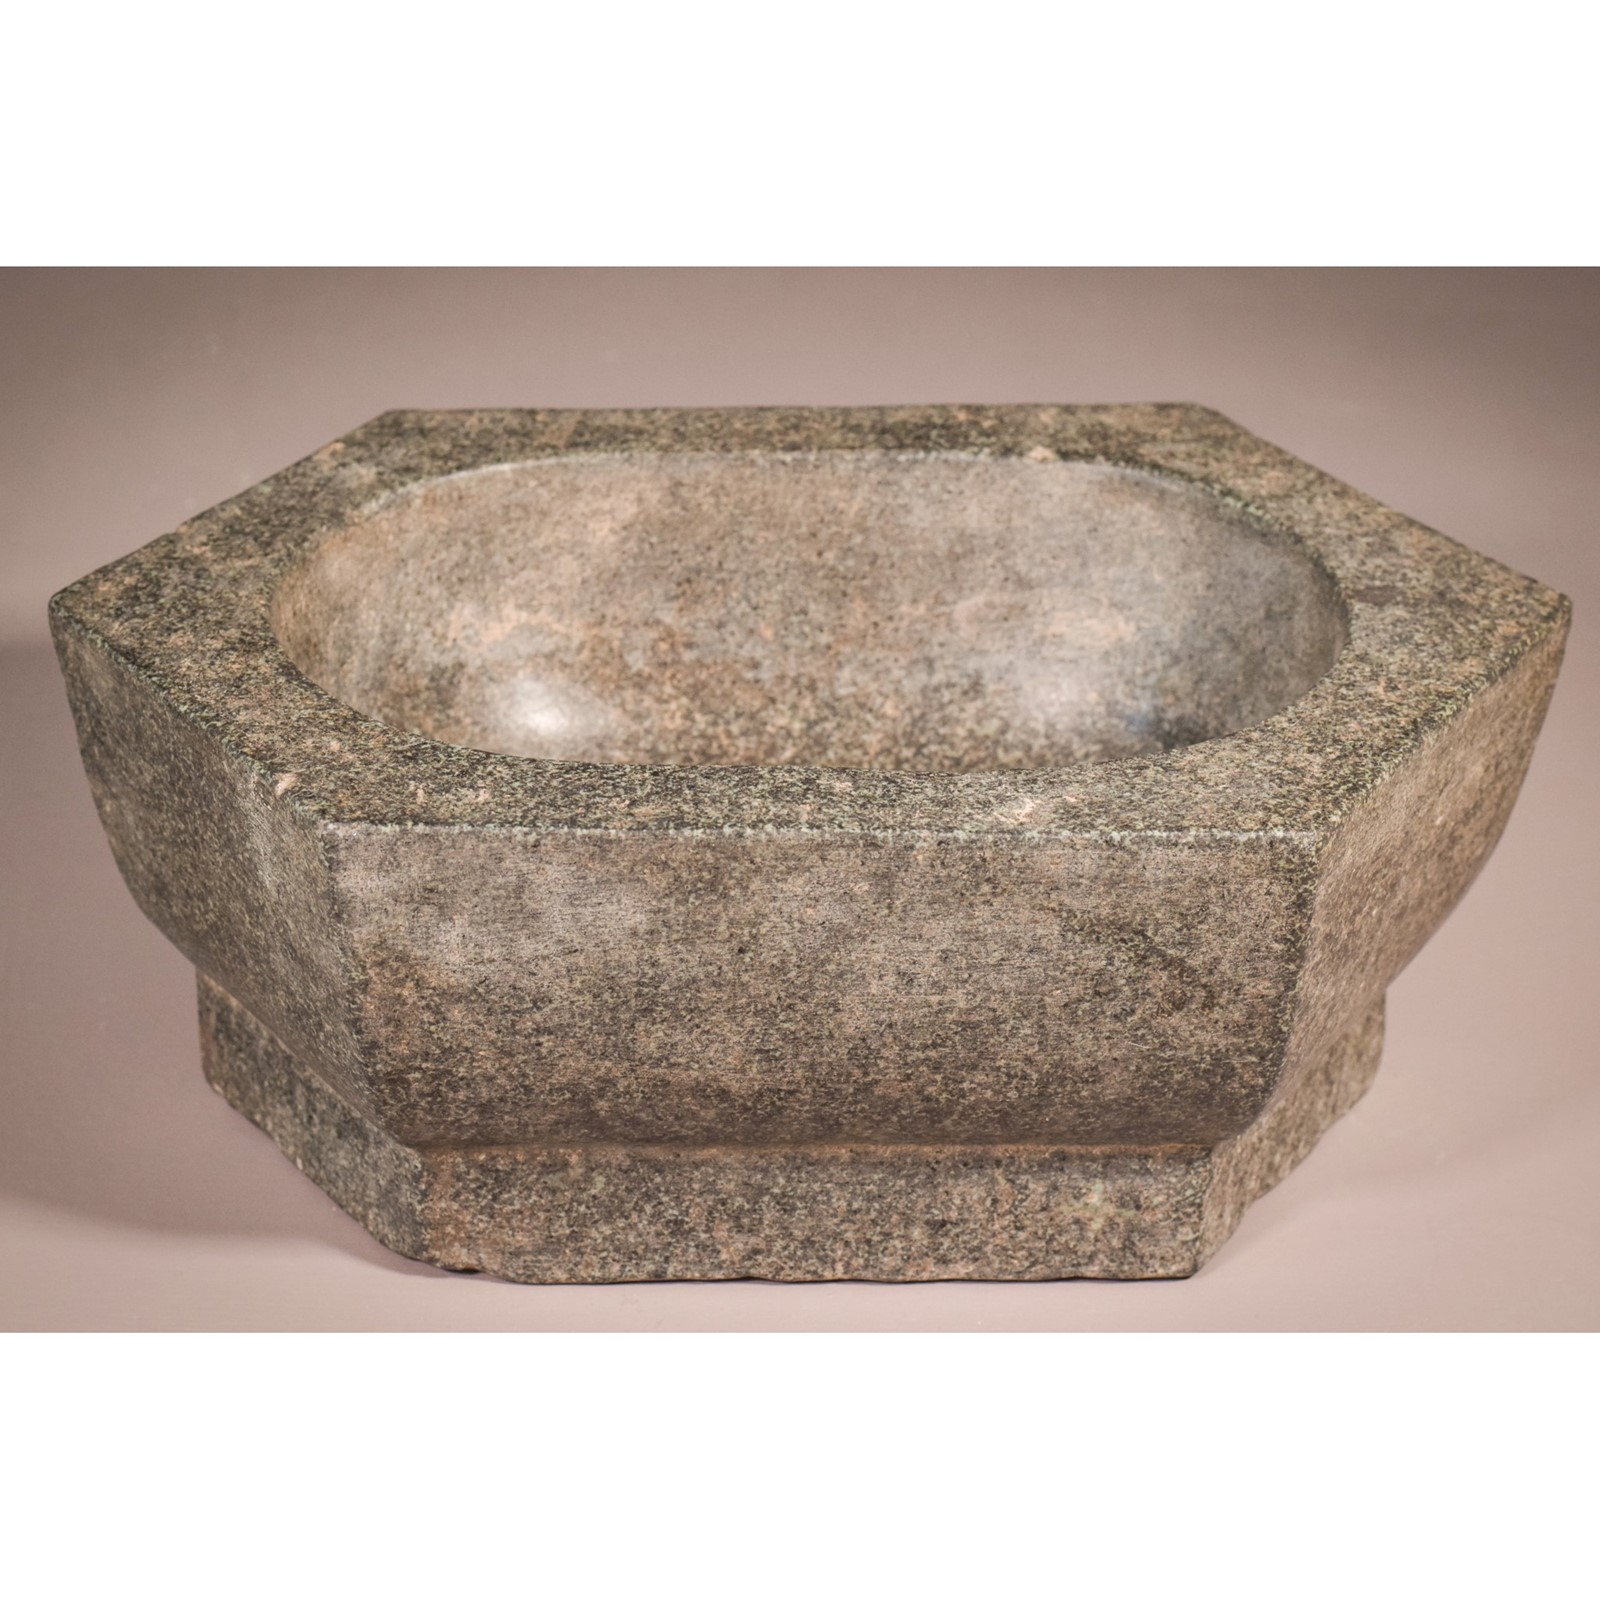 Carved Stone Bowl – Anecdote